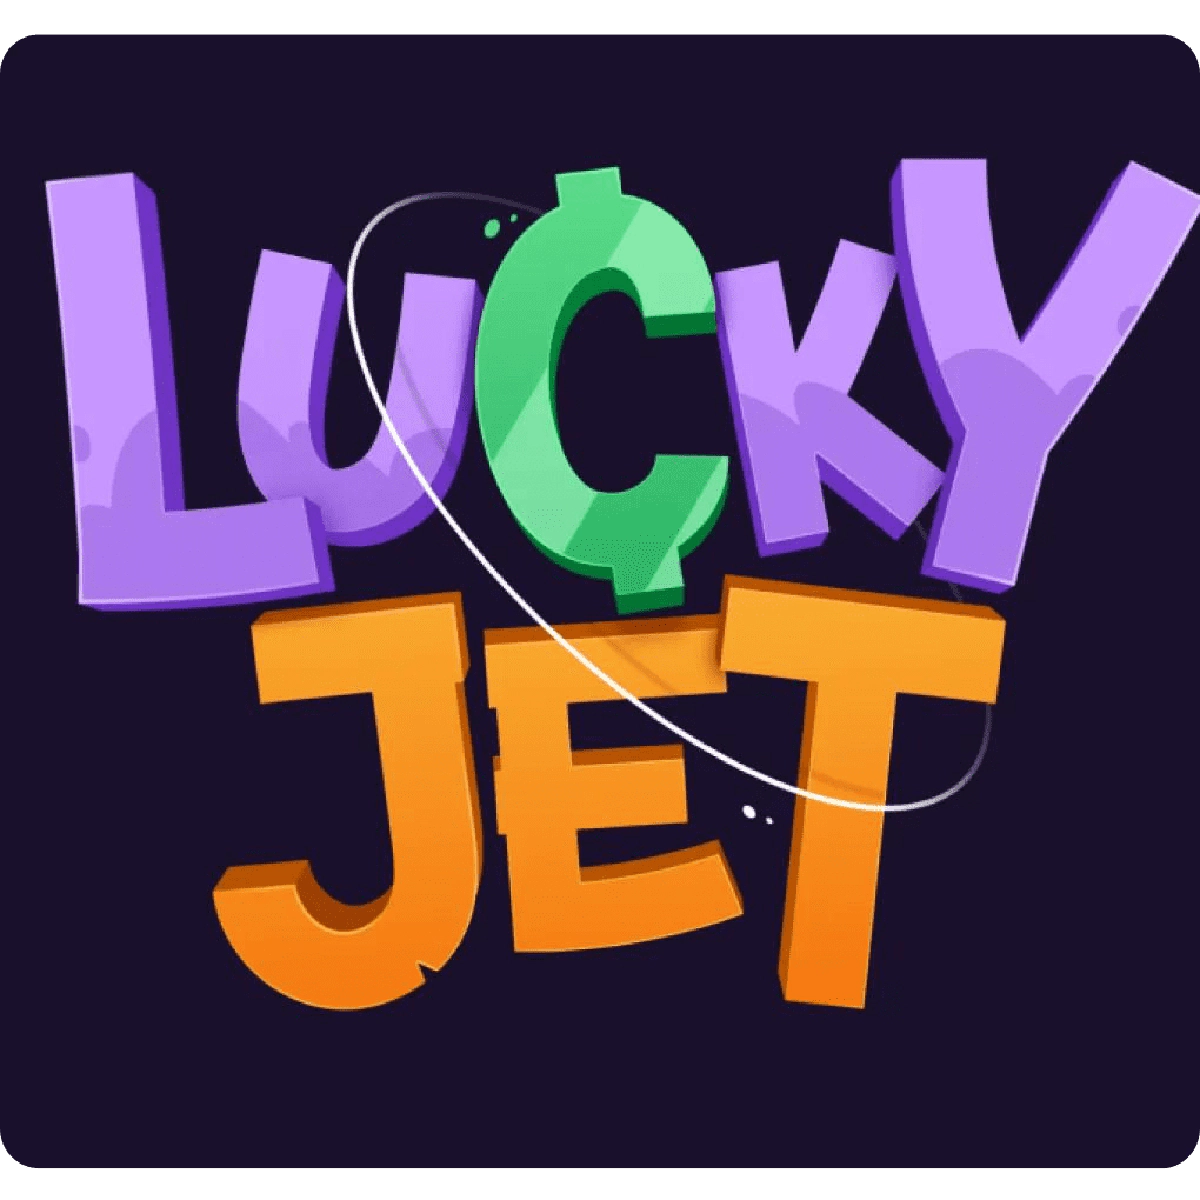 lucky jet 1win